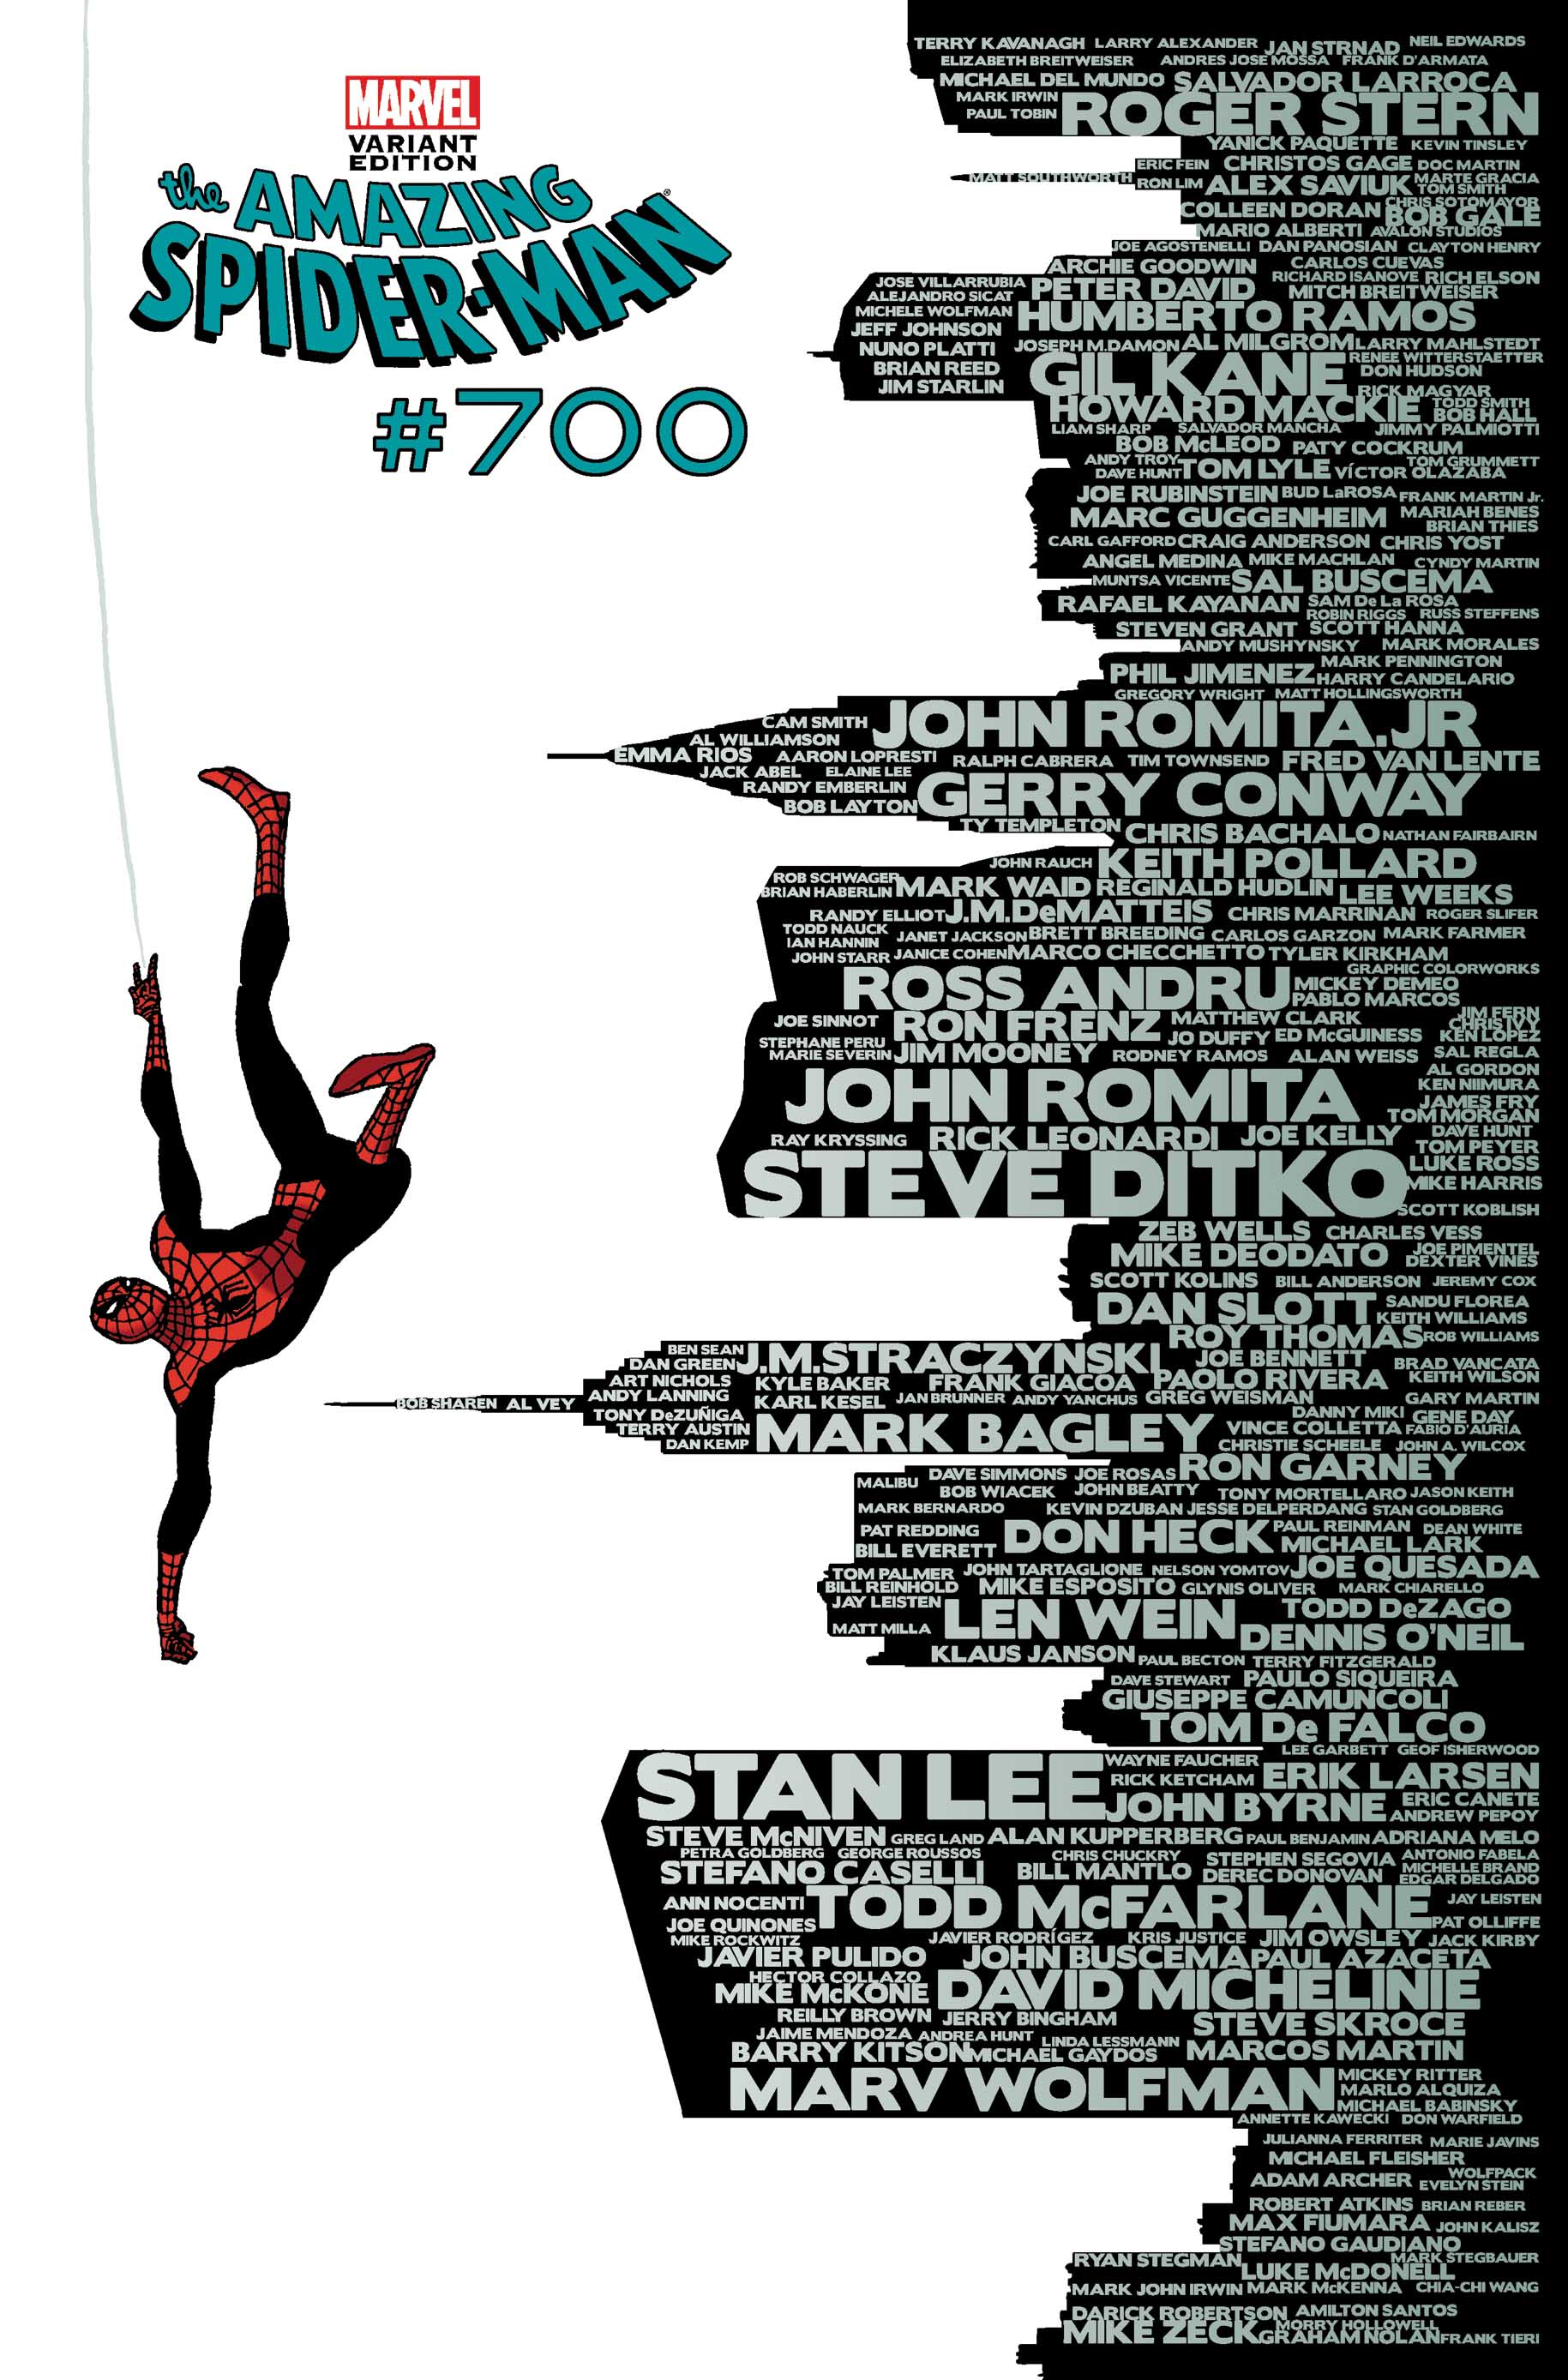 Amazing Spider-Man (1999) #700 (Asm 50th Anniversary Variant)